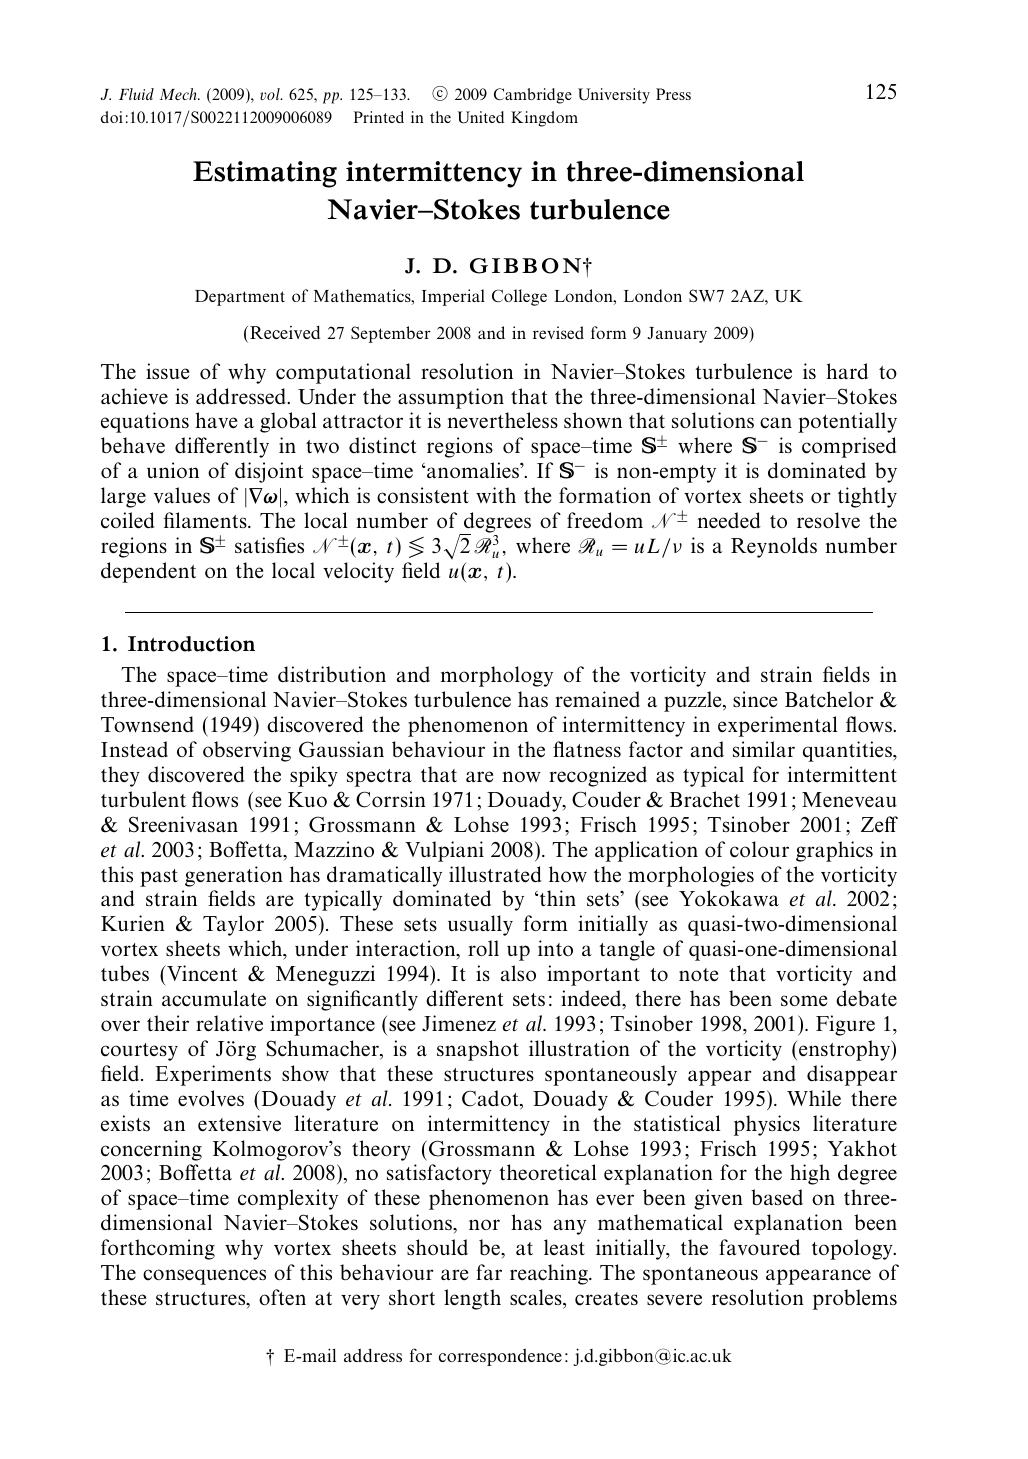 Estimating intermittency in three-dimensional NavierâStokes turbulence by J. D. GIBBON